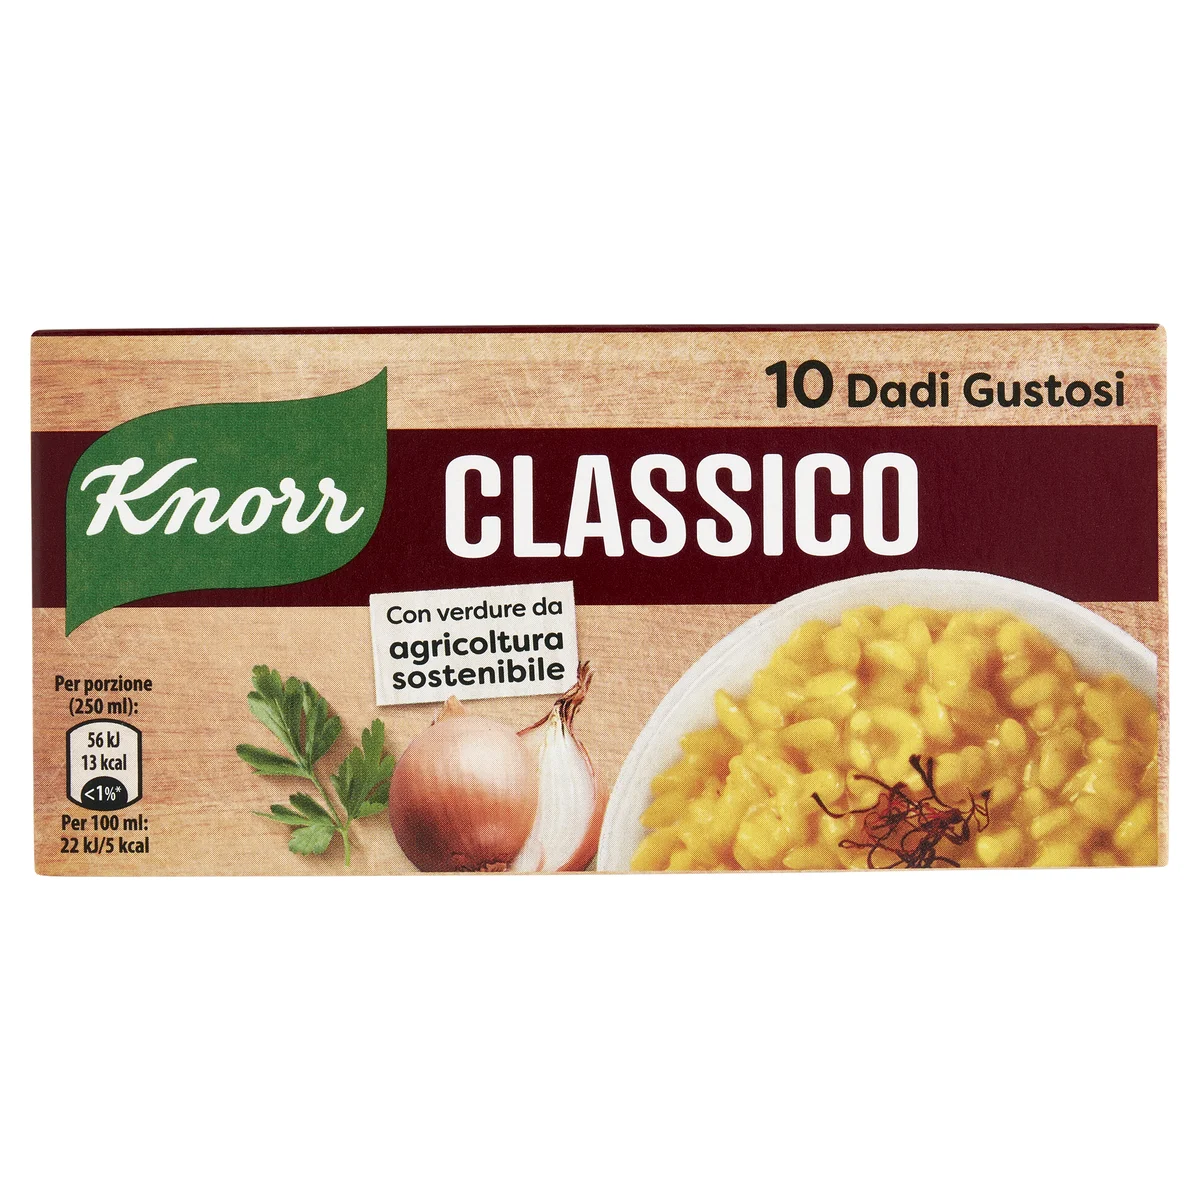 Knorr Classico 10 dadi 100 g